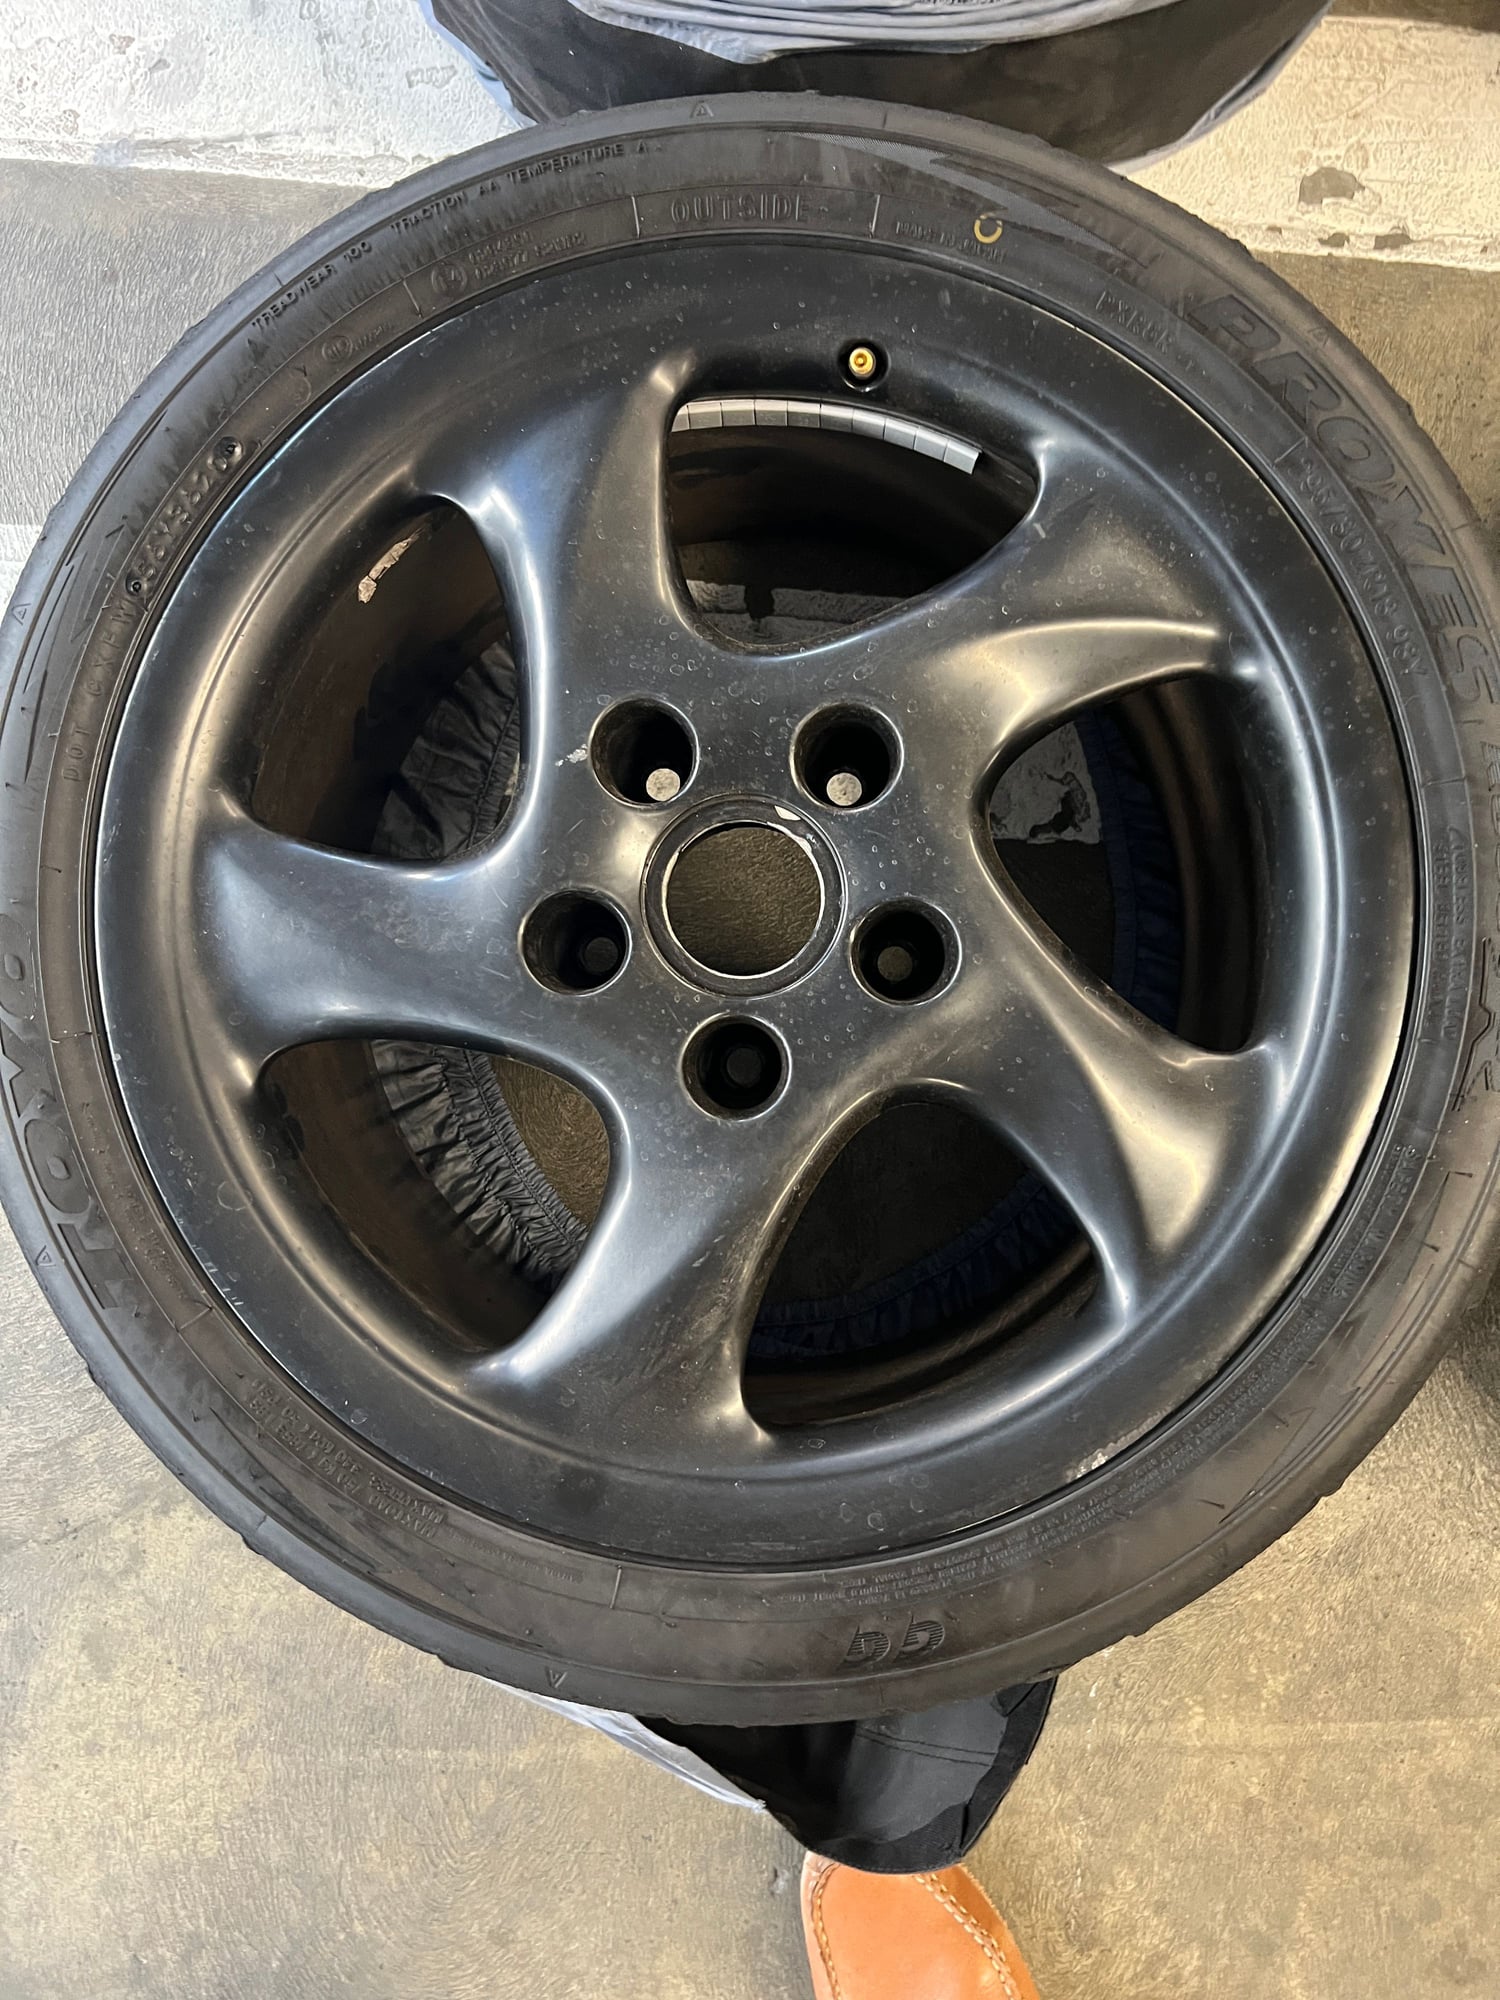 Wheels and Tires/Axles - Black Rims with Tires - Used - 2001 Porsche 911 - El Segundo, CA 90245, United States